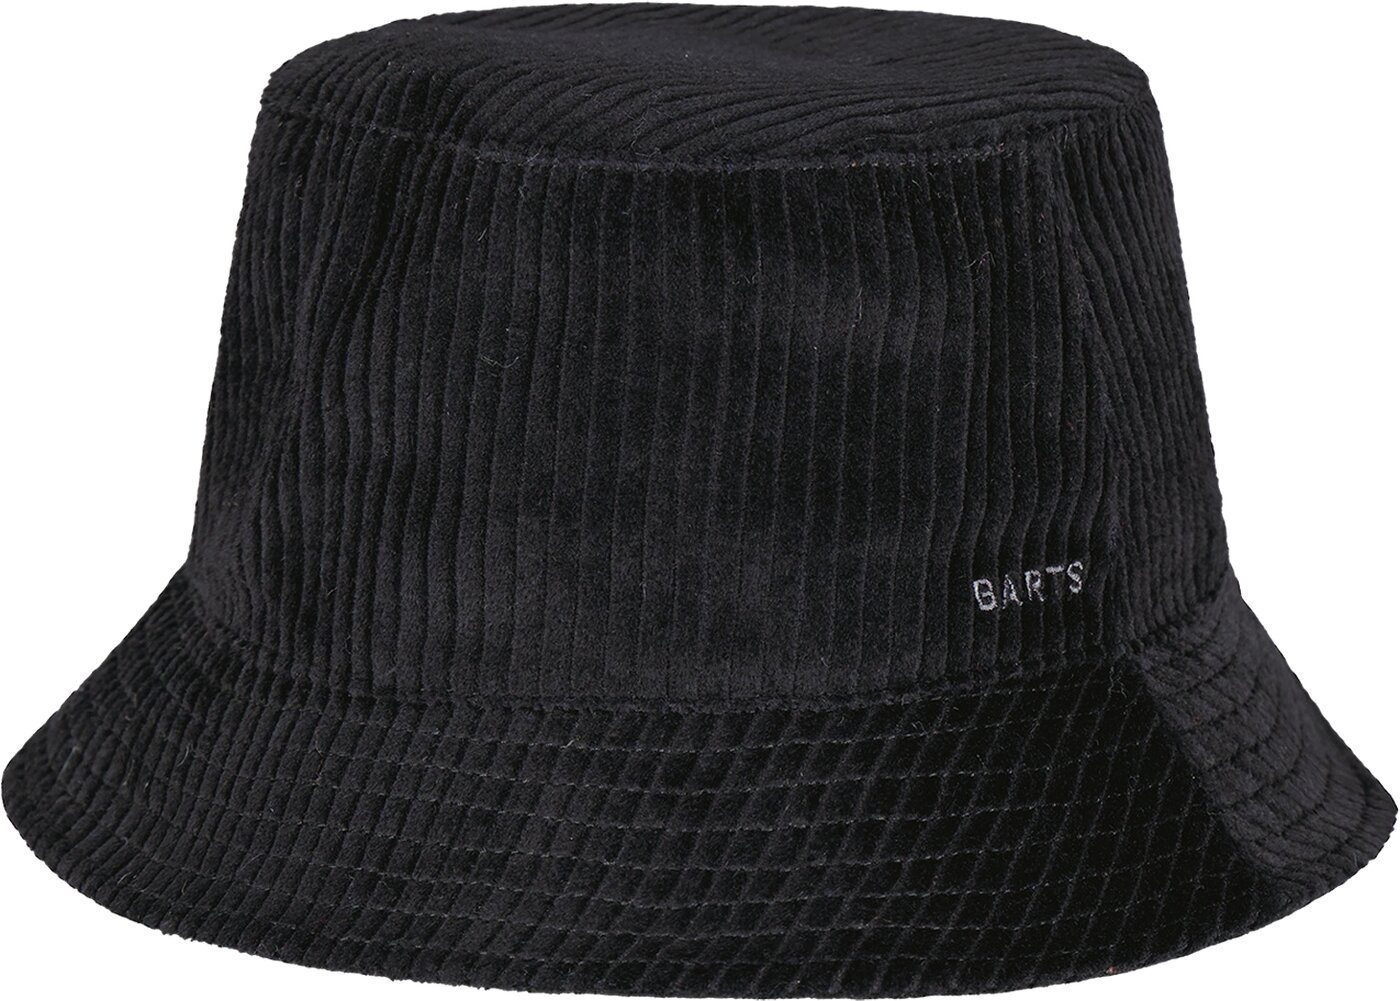 Barts Snapback BLACK Hat Cap Balomba